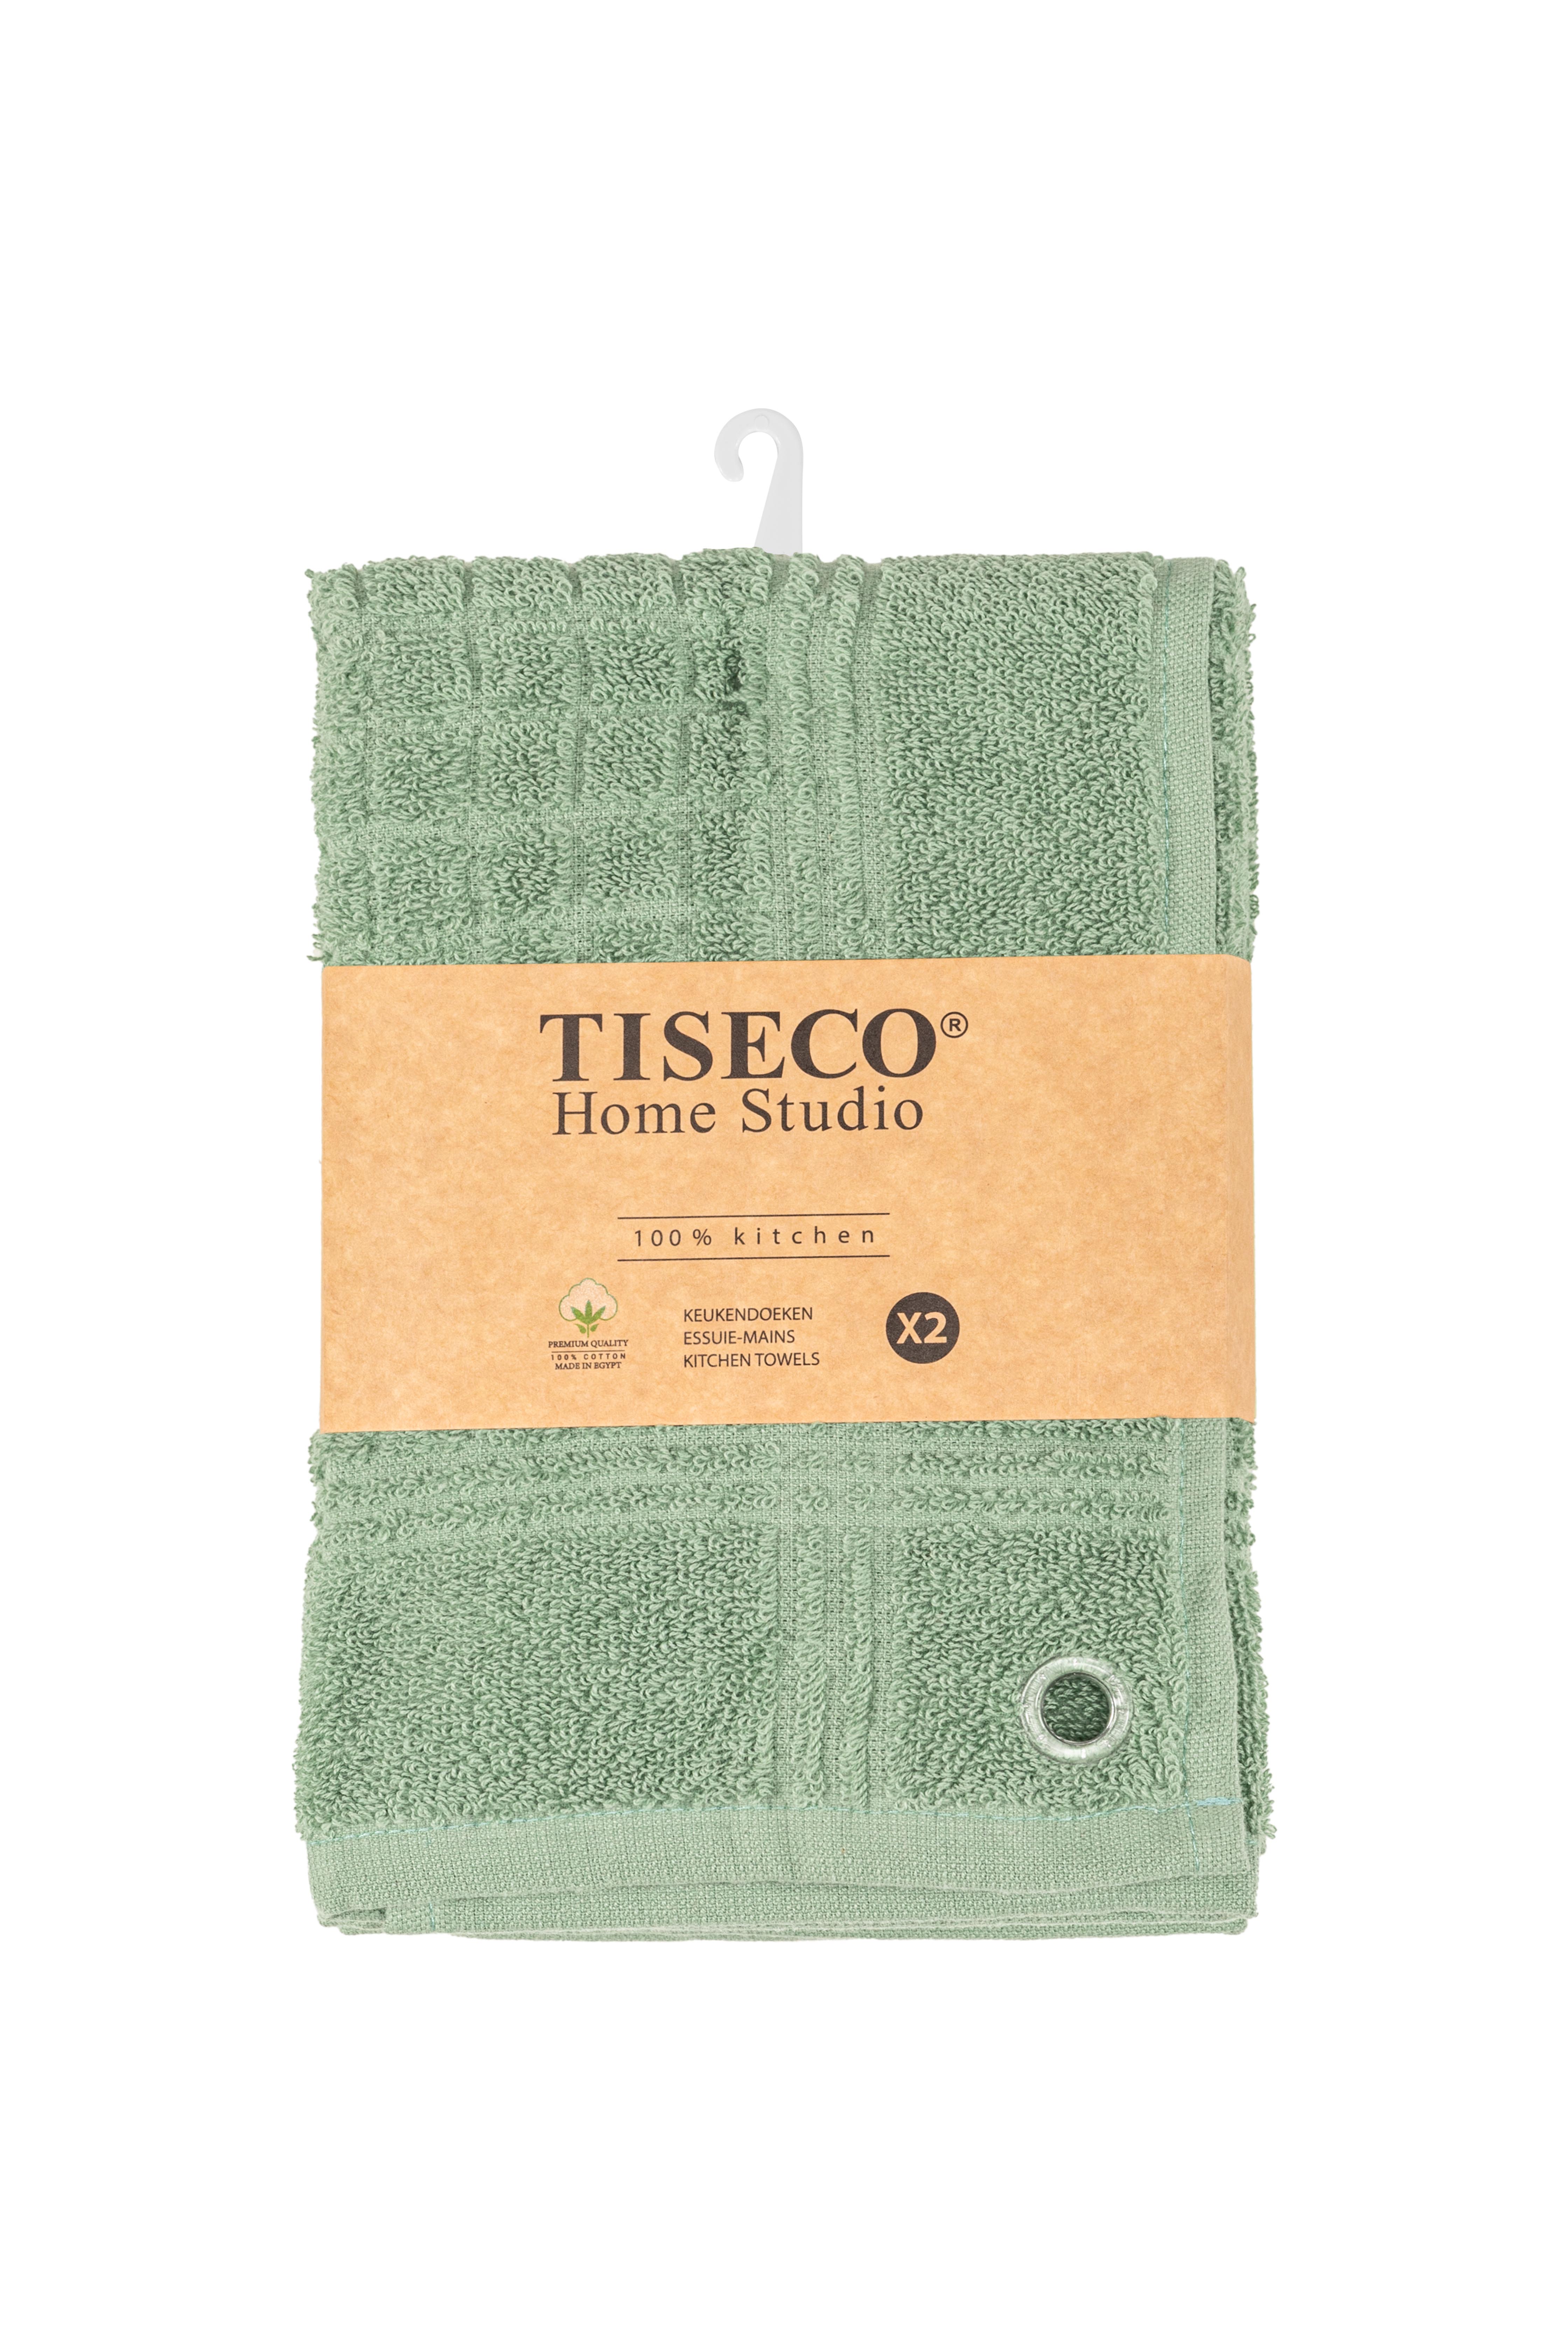 Square terry towel PHARAO  50x50 cm - set/2, smoke green